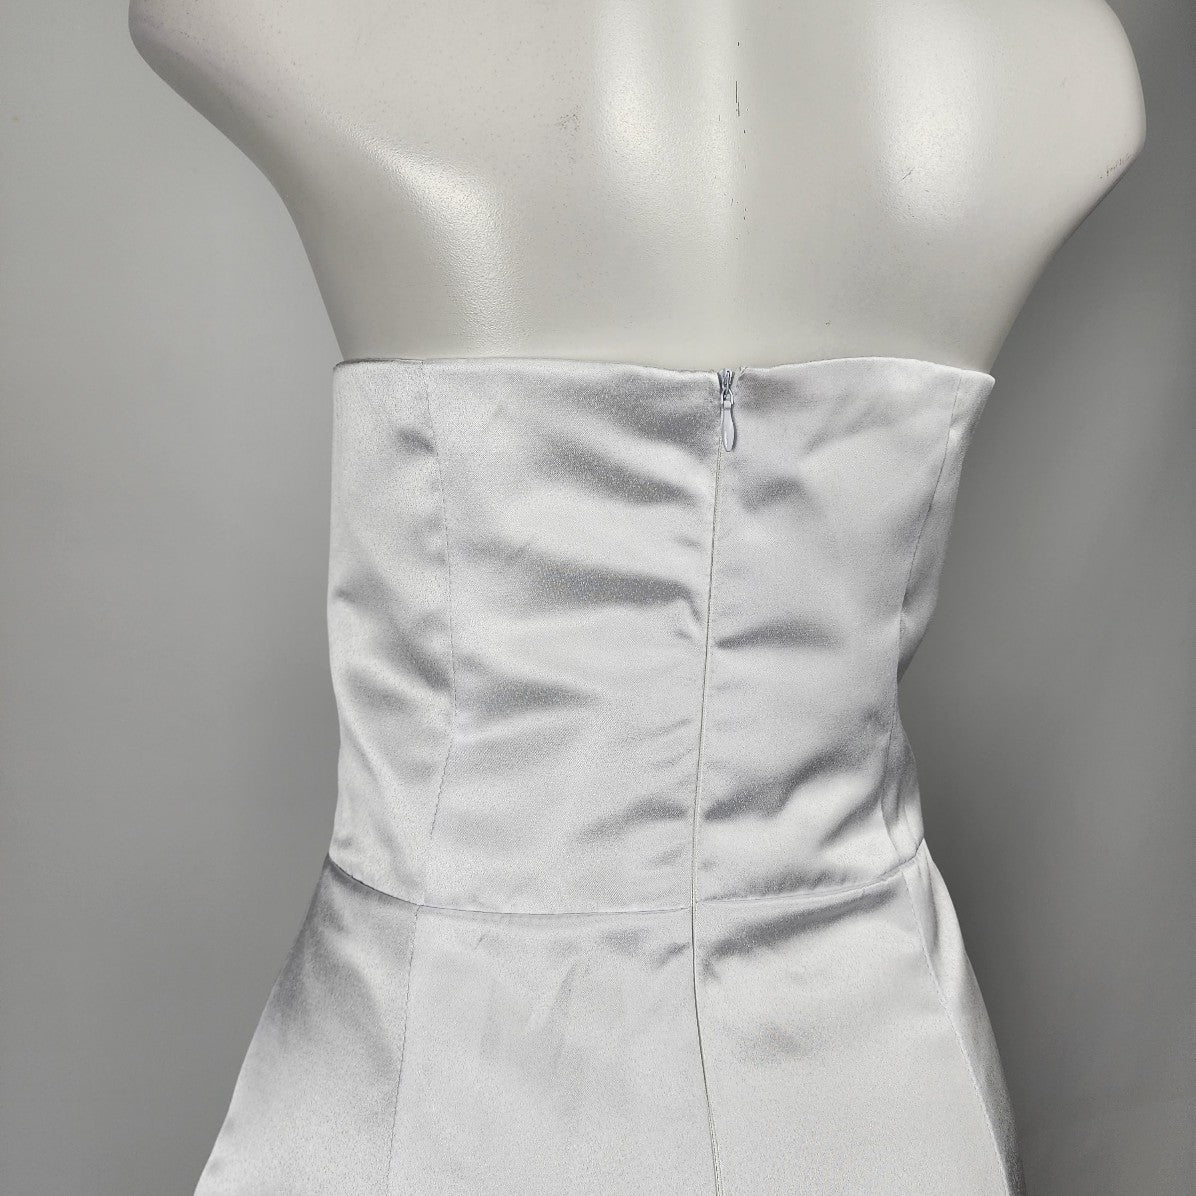 White Satin Jumpsuit Skirted Wedding Dress Size M/L